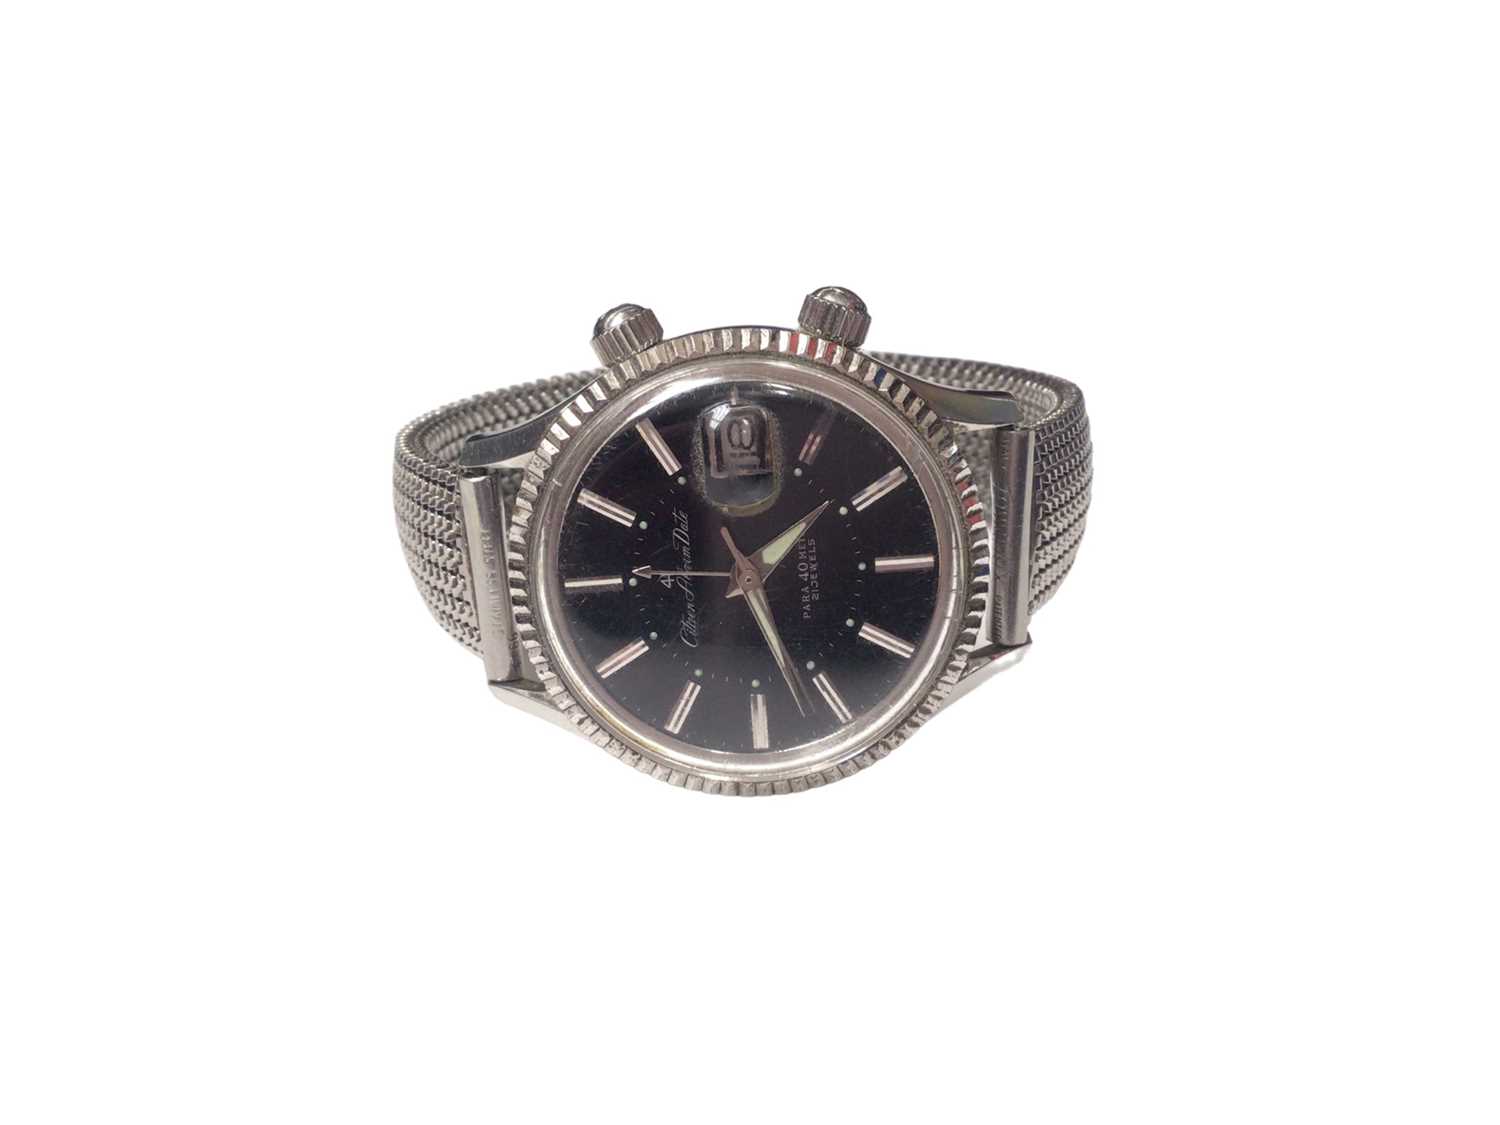 Gentlemen's Citizen Alarm Date stainless steel wristwatch